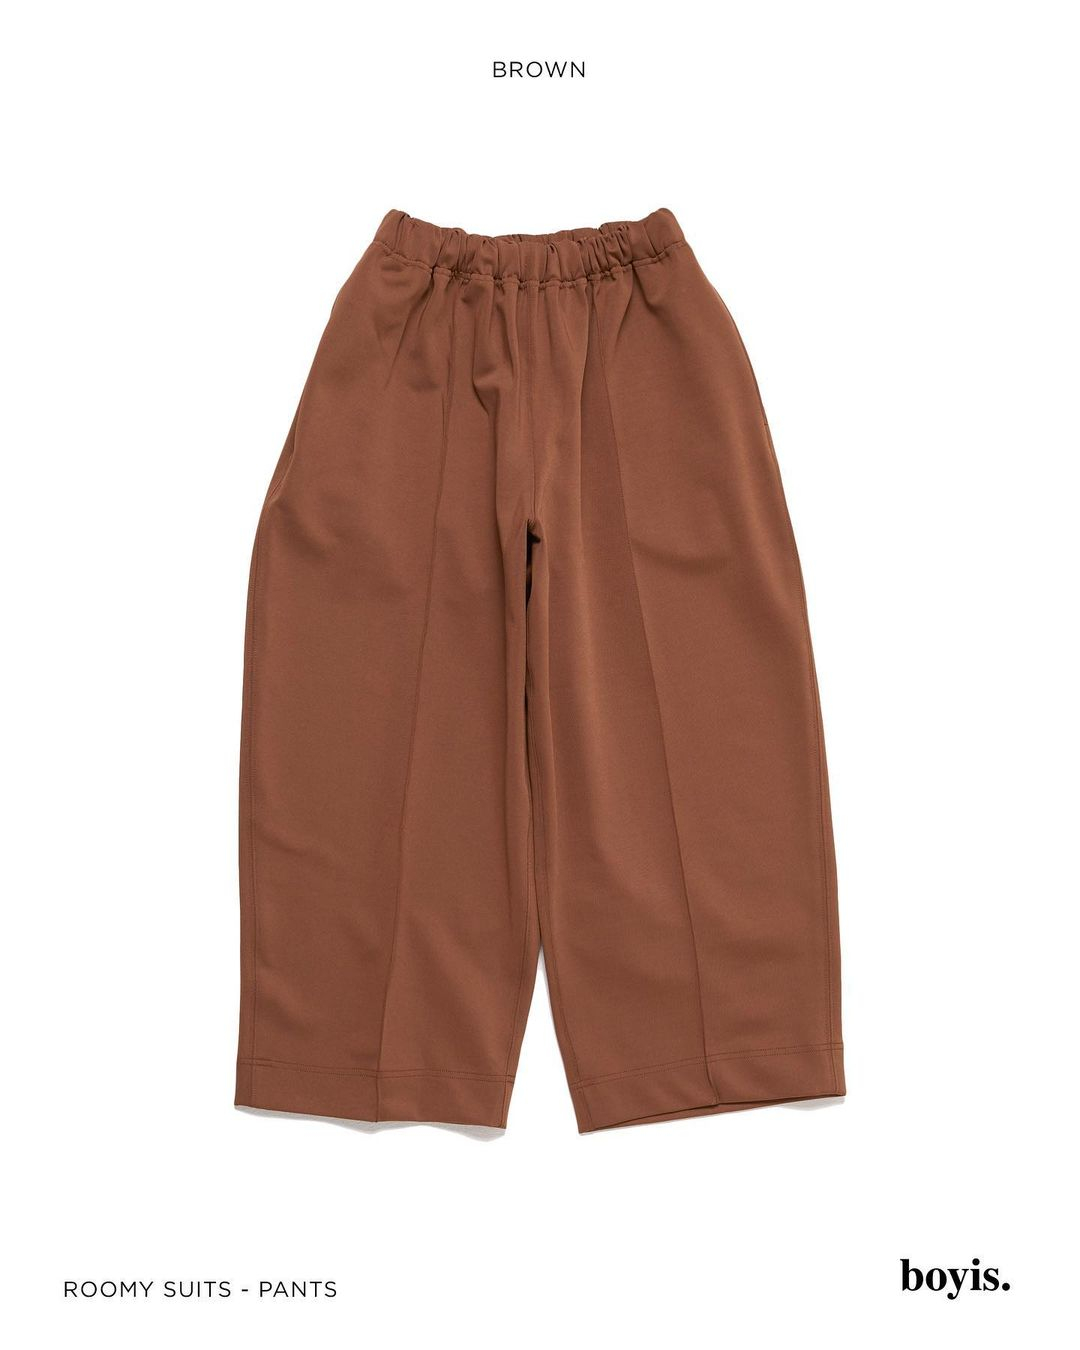 Roomy Suits Pants (Brown)